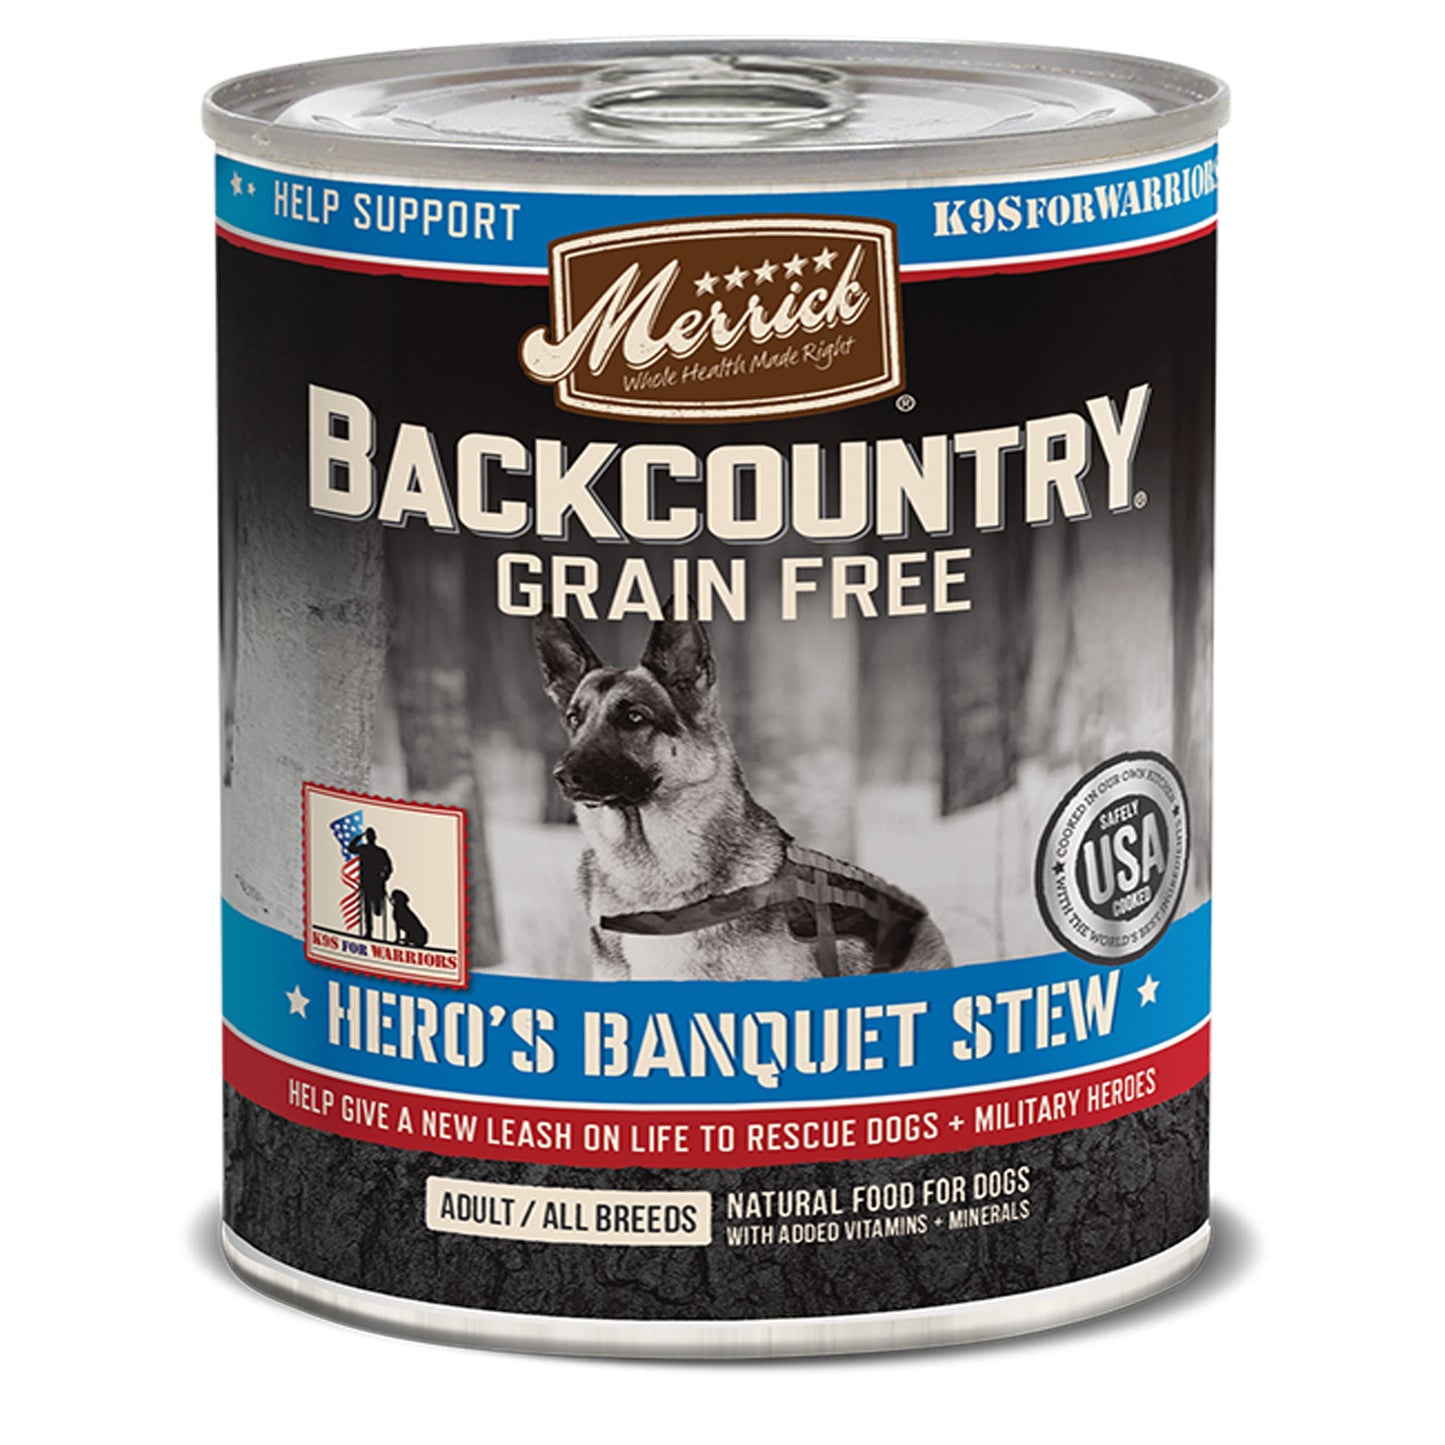 Merrick Dog Backcountry Hero Banquet 12.7oz. (Case of 12)